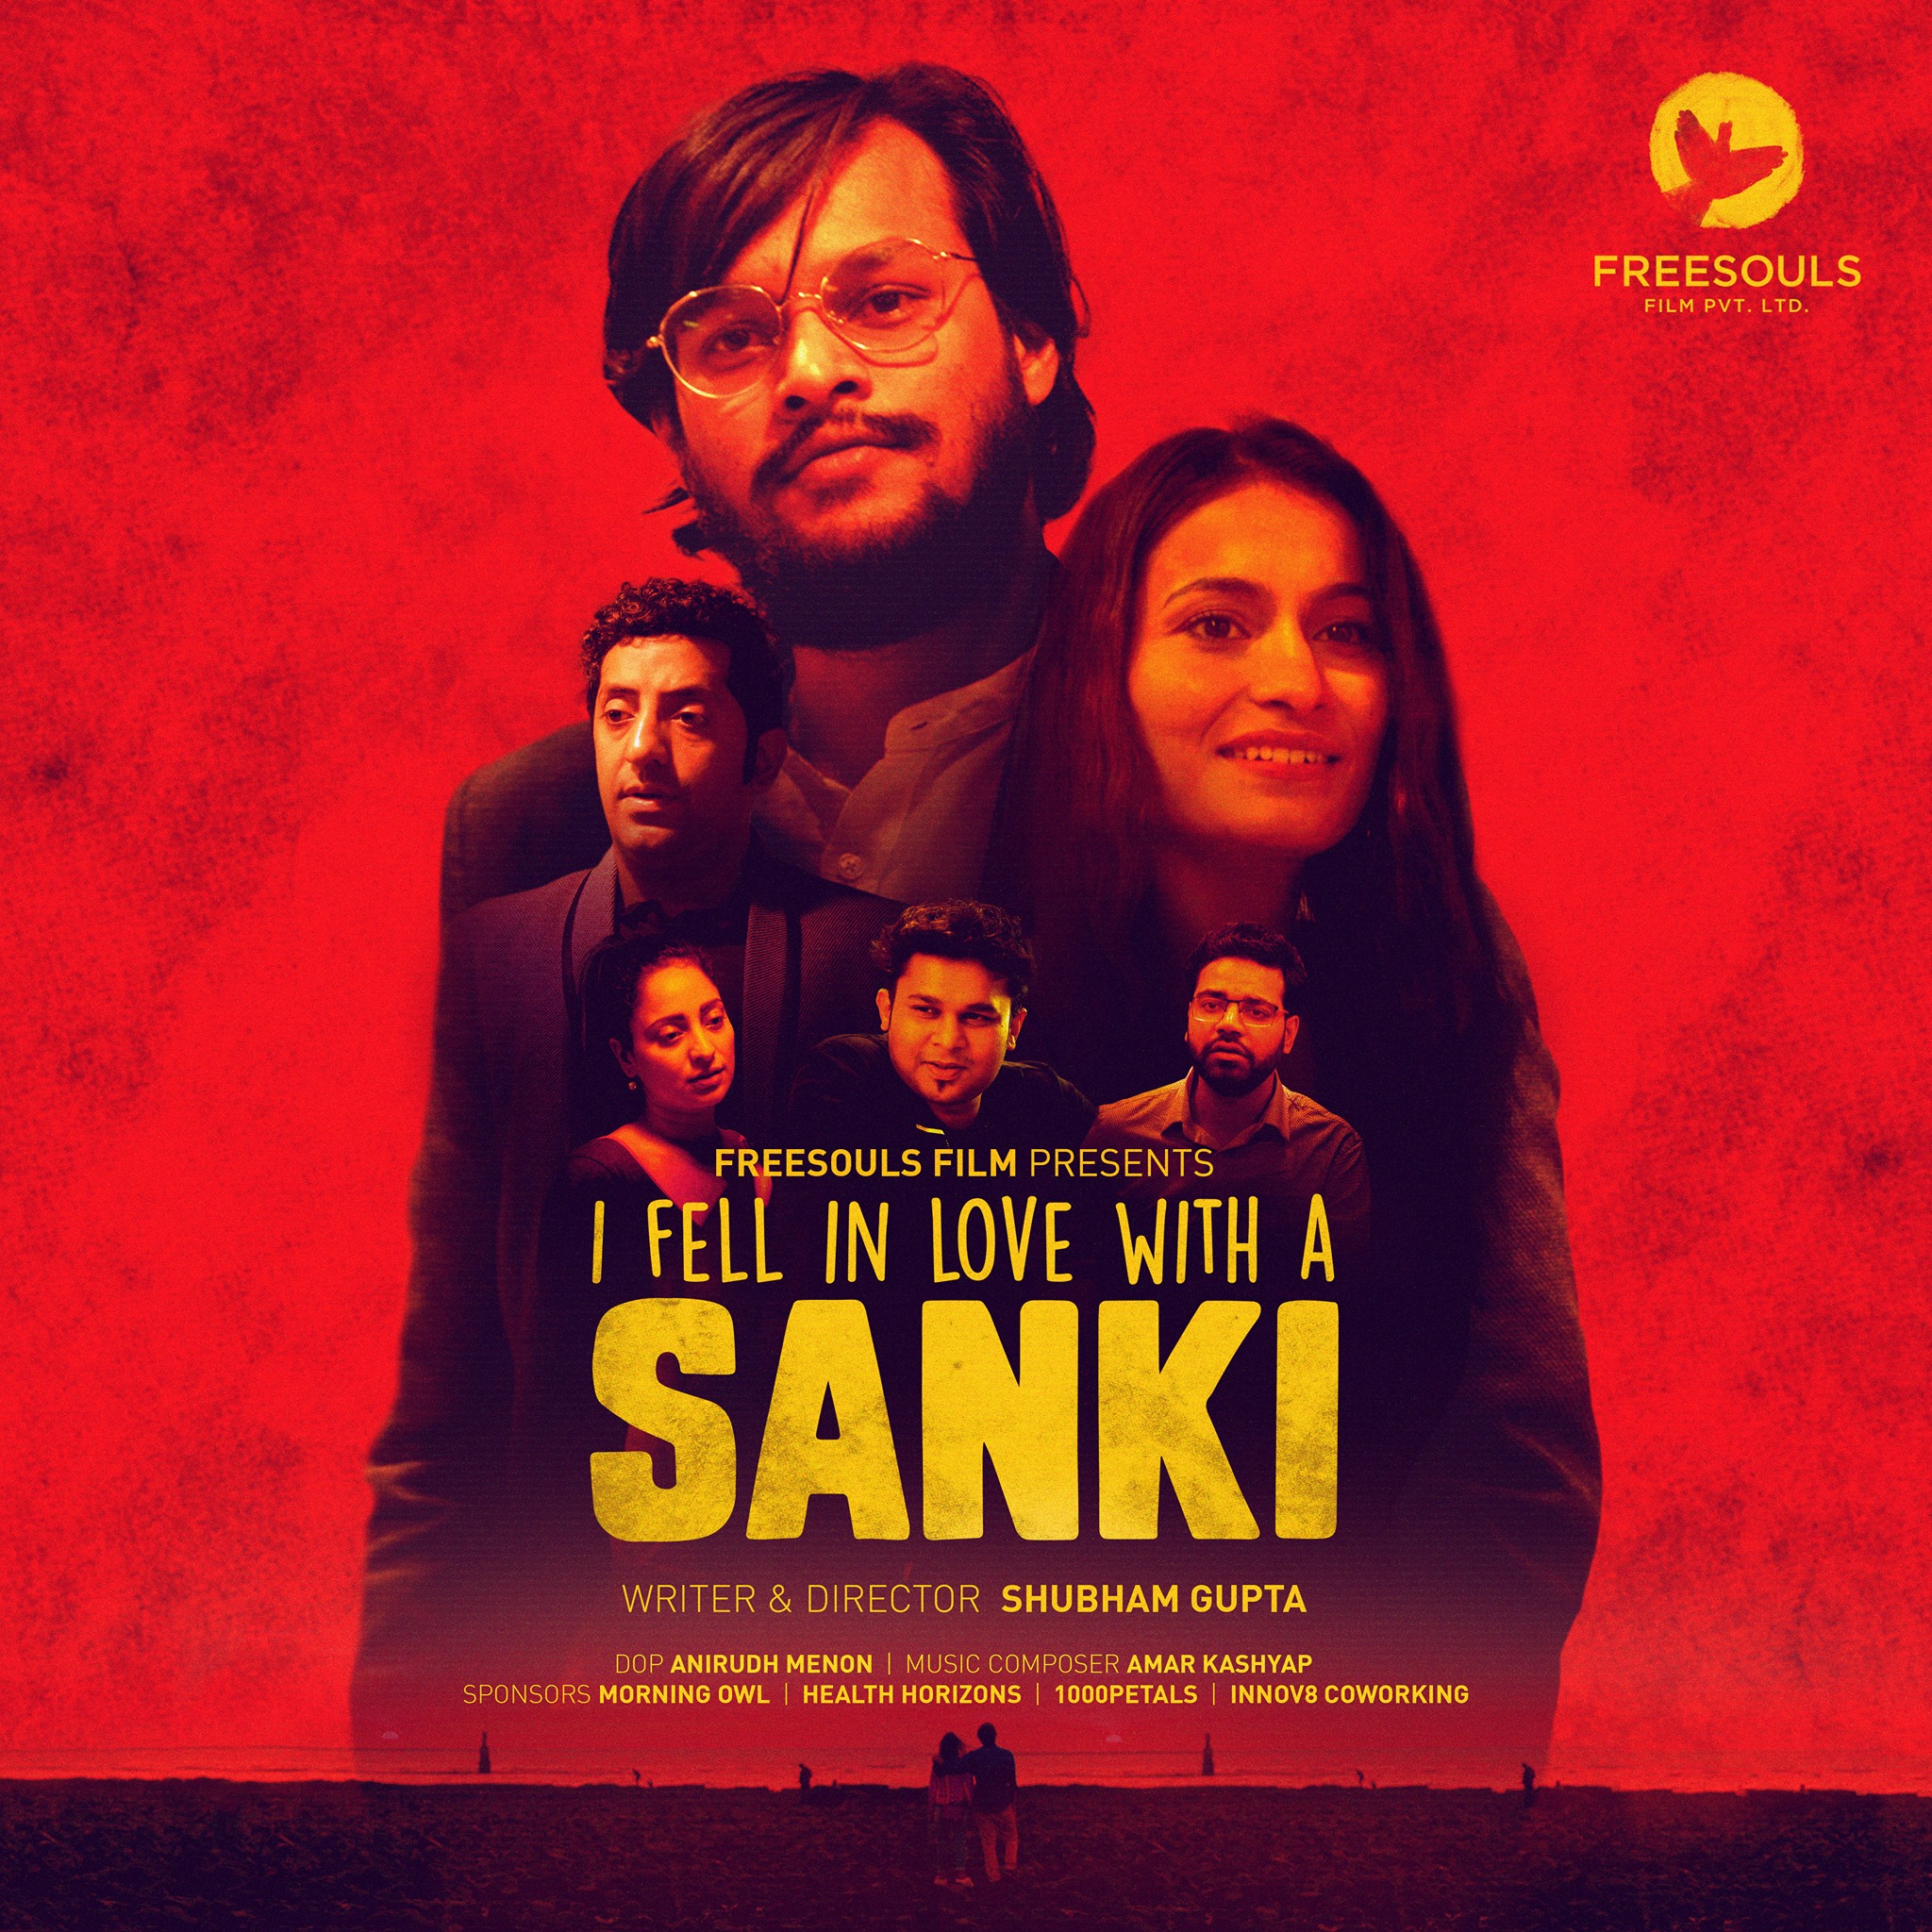 I Fell in Love With a Sanki 2021 S01 Hindi AMZN 720p HDRip 550MB